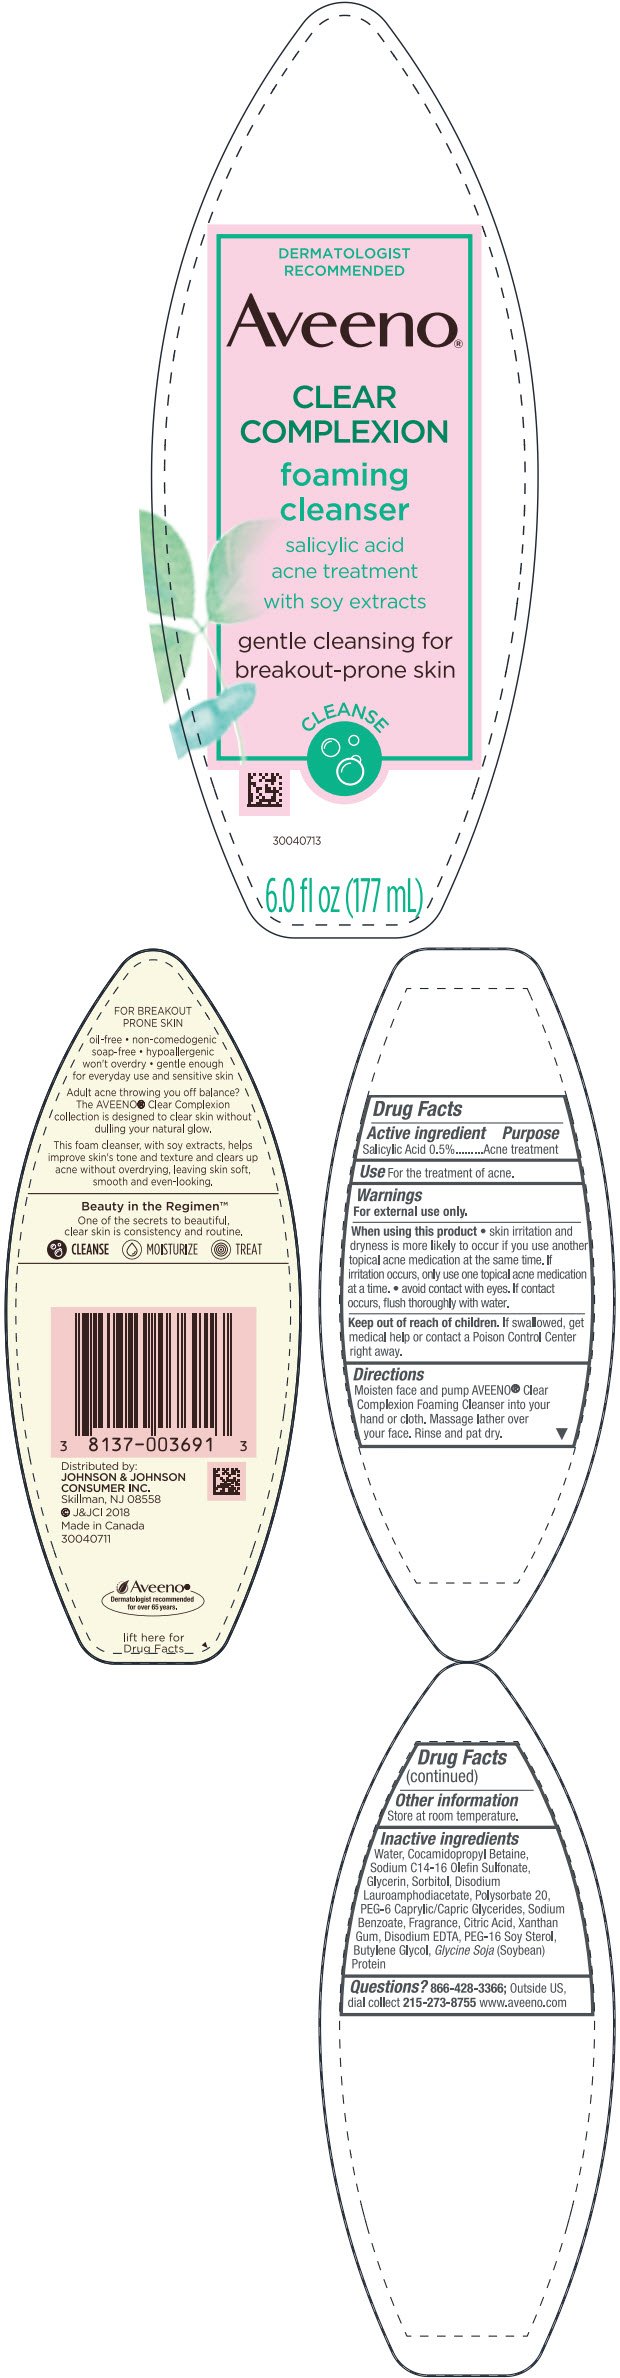 PRINCIPAL DISPLAY PANEL - 177 mL Bottle Label